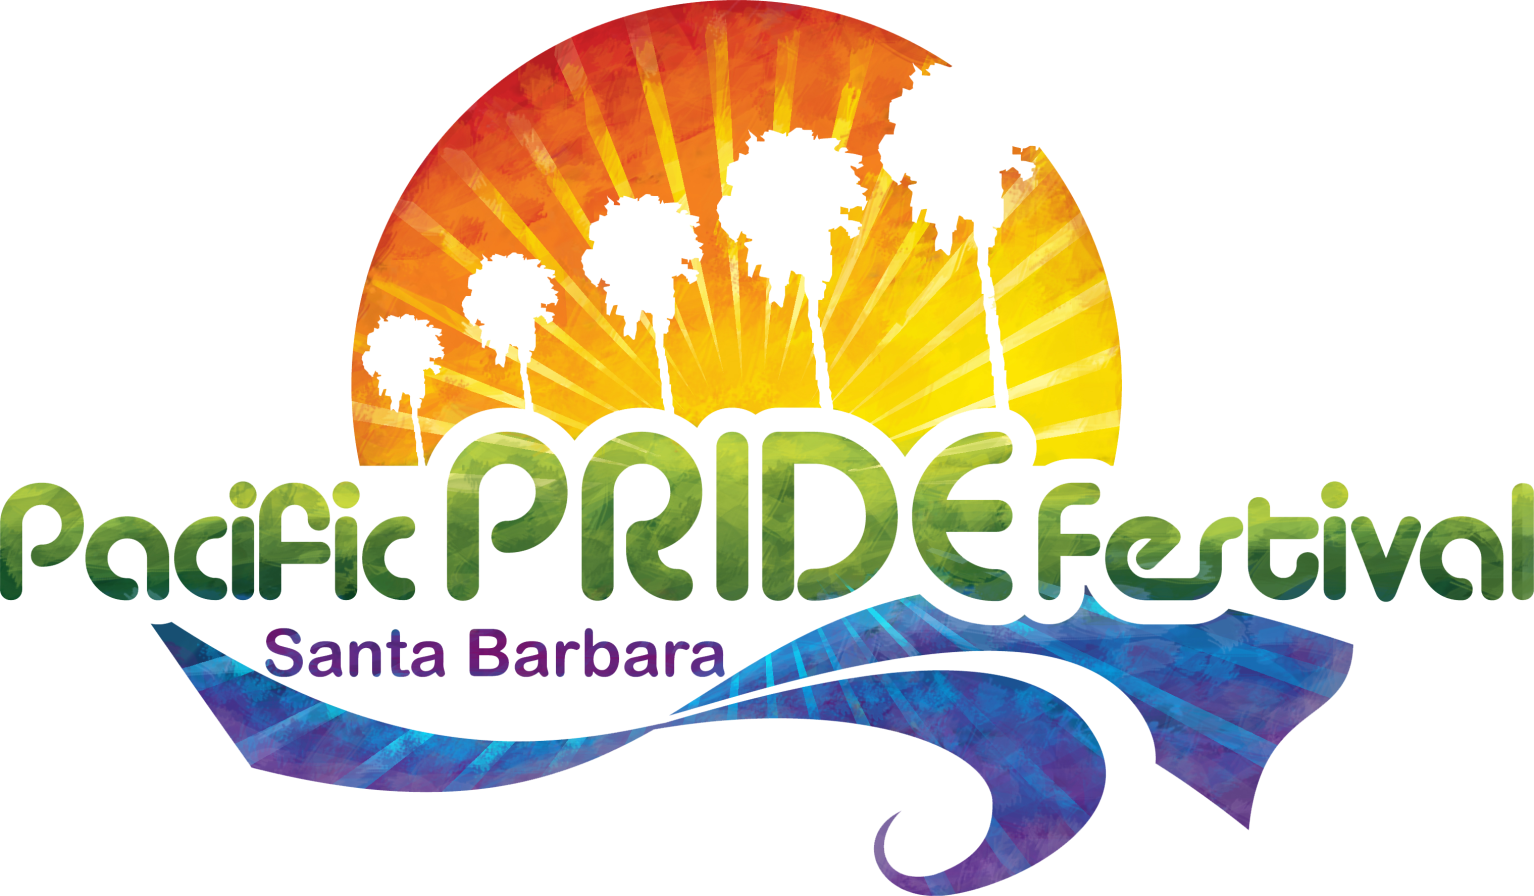 Pacific Pride Festival The Santa Barbara Independent